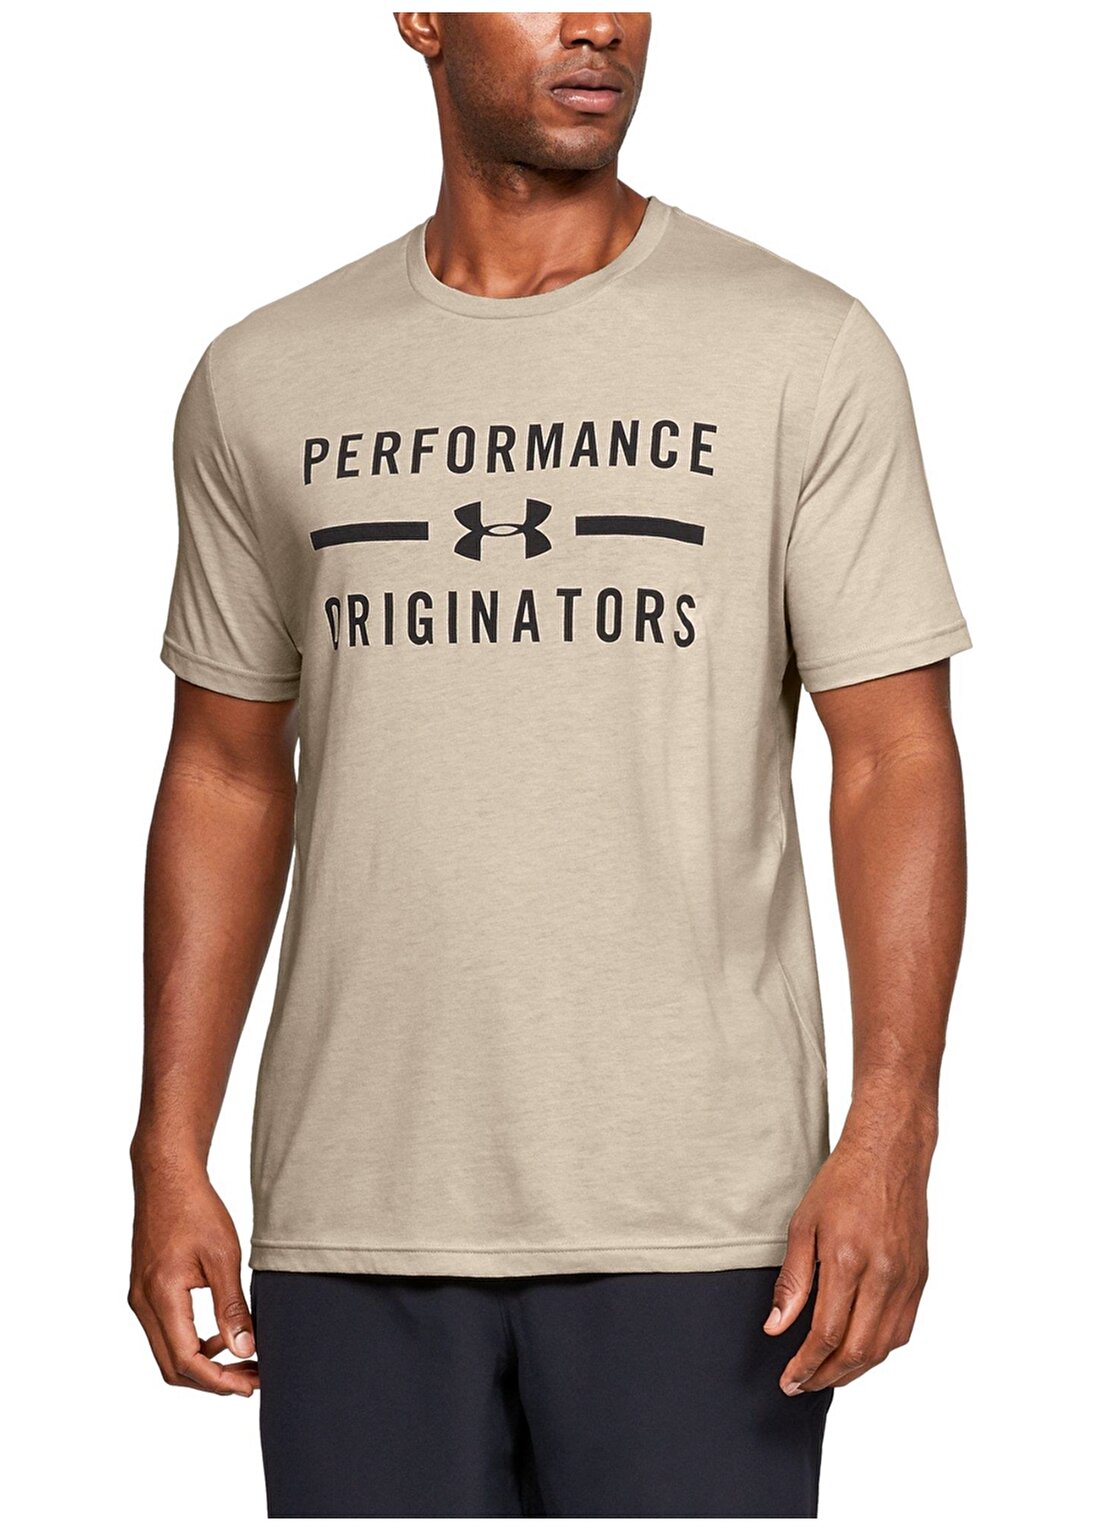 Under Armour Performance Originators T-Shirt